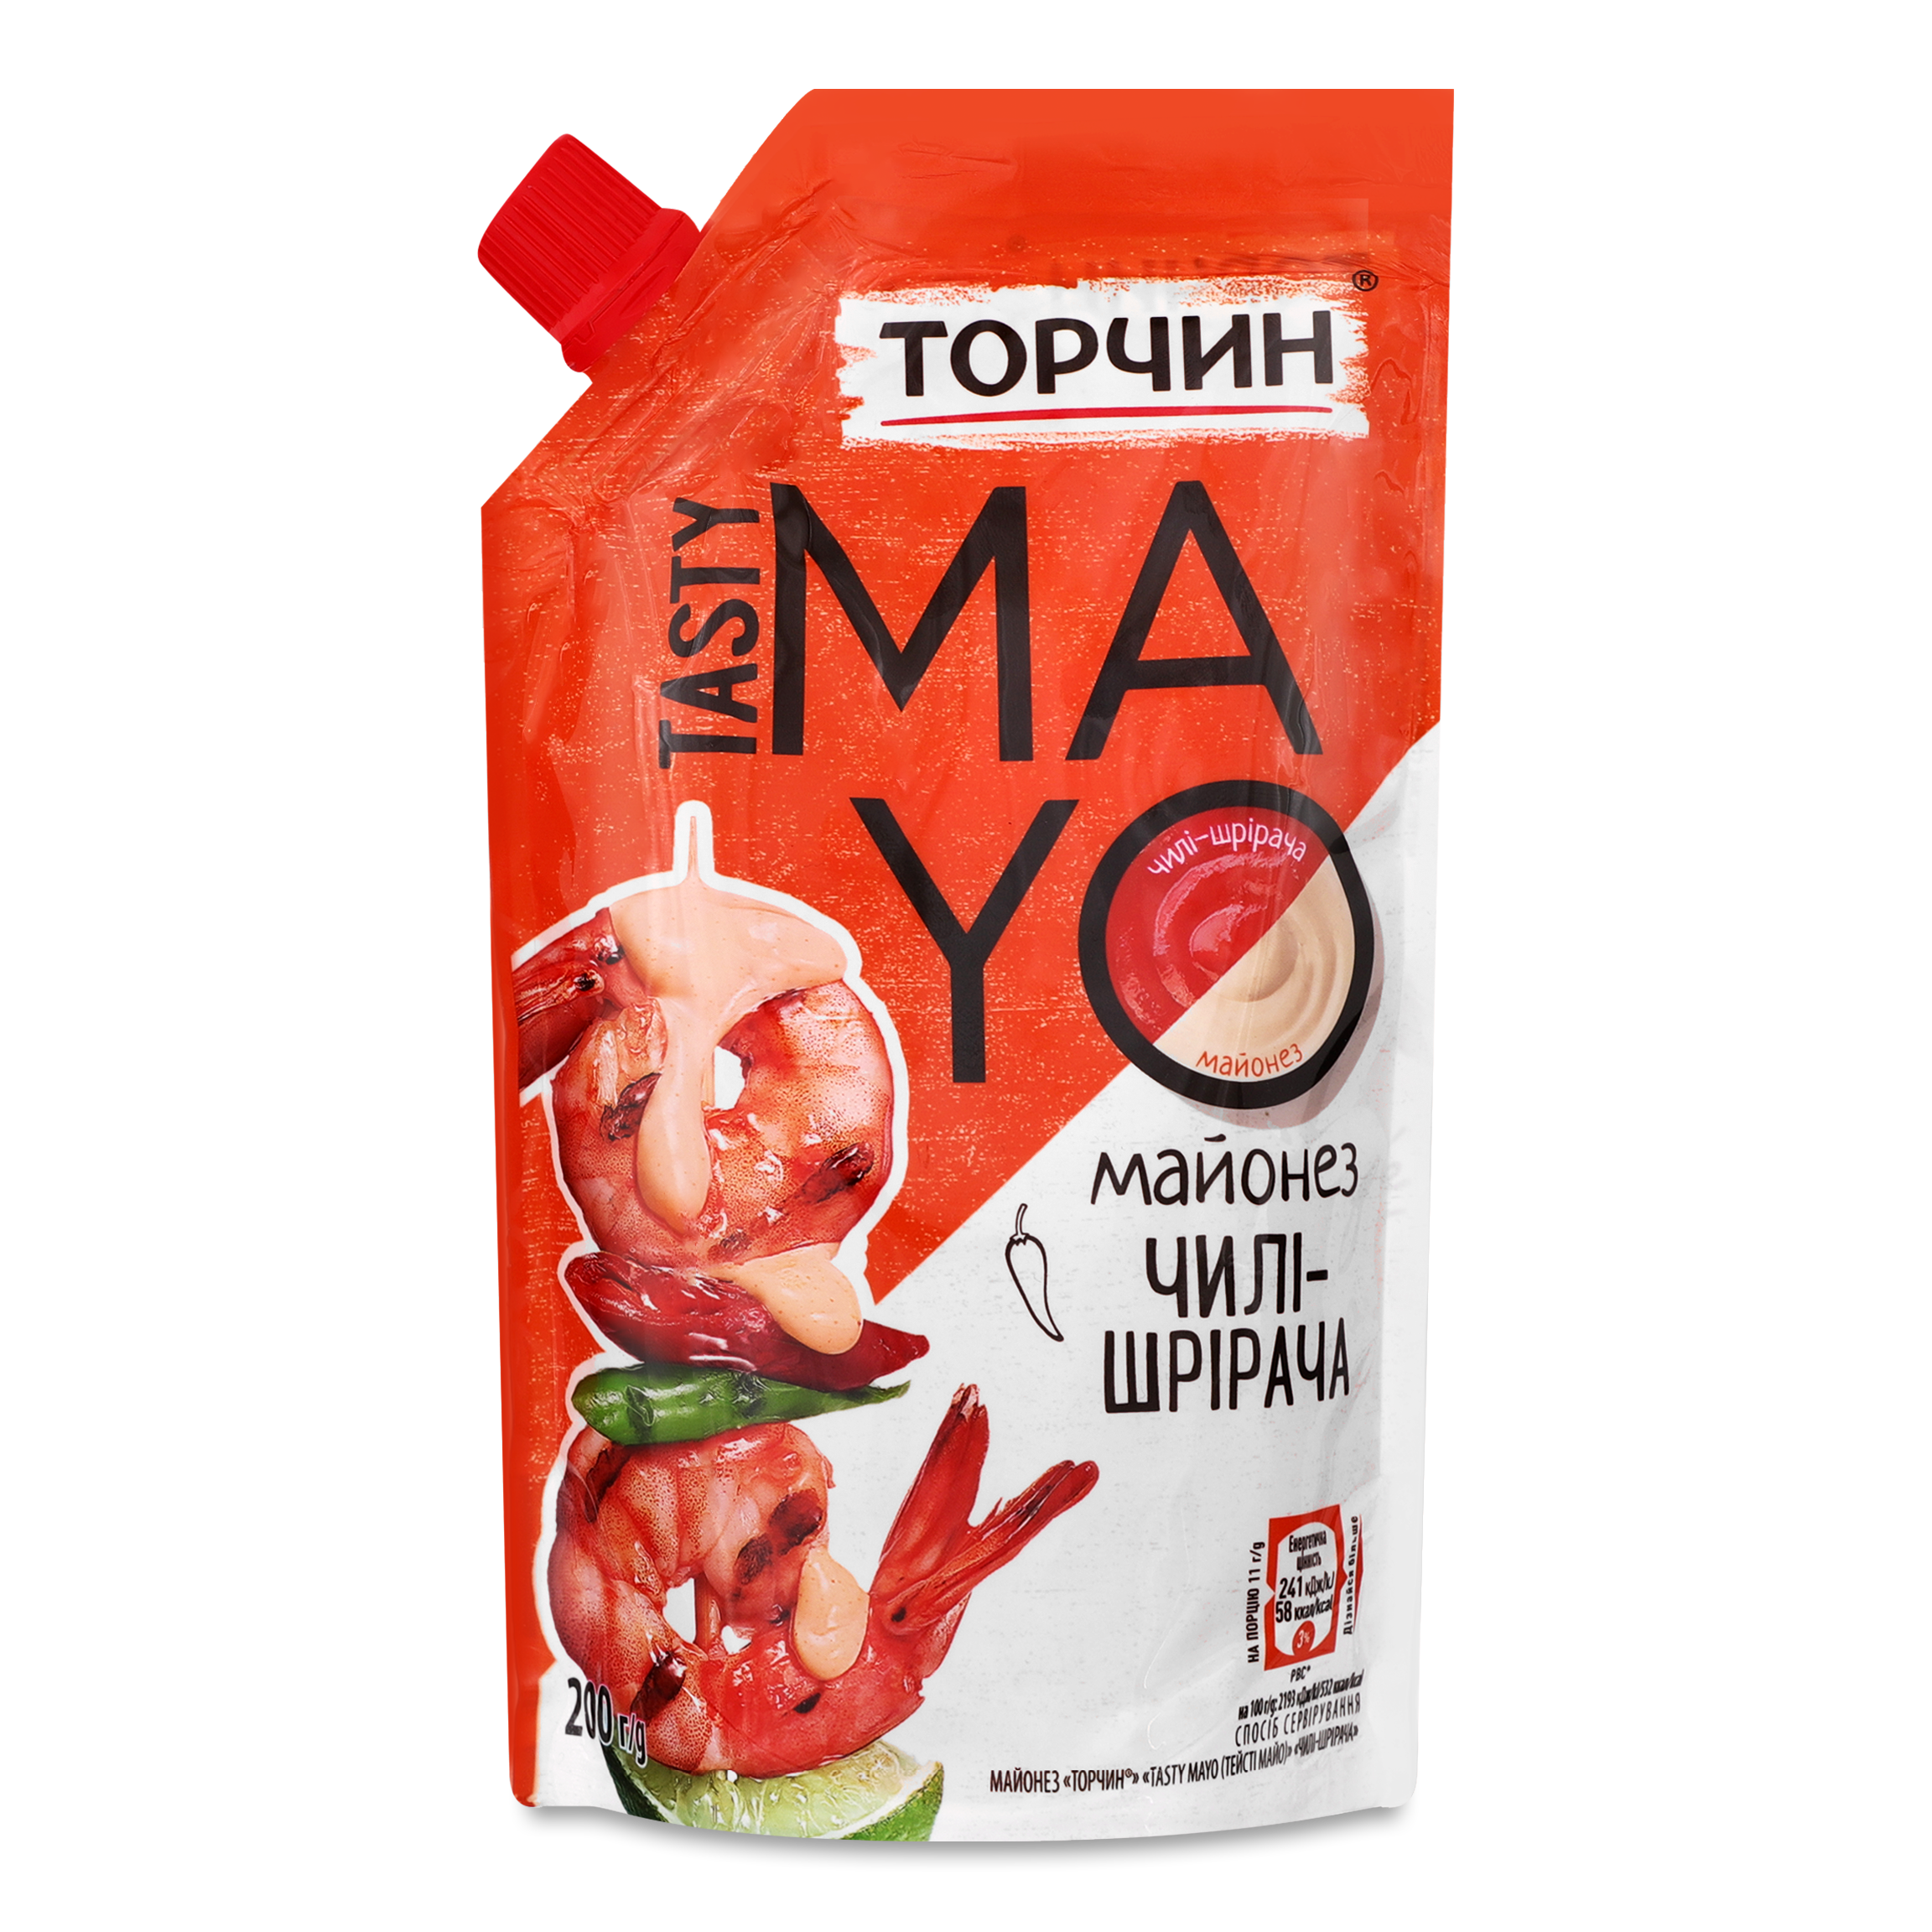 Torchyn mayonnaise Tasty Mayo chili 200